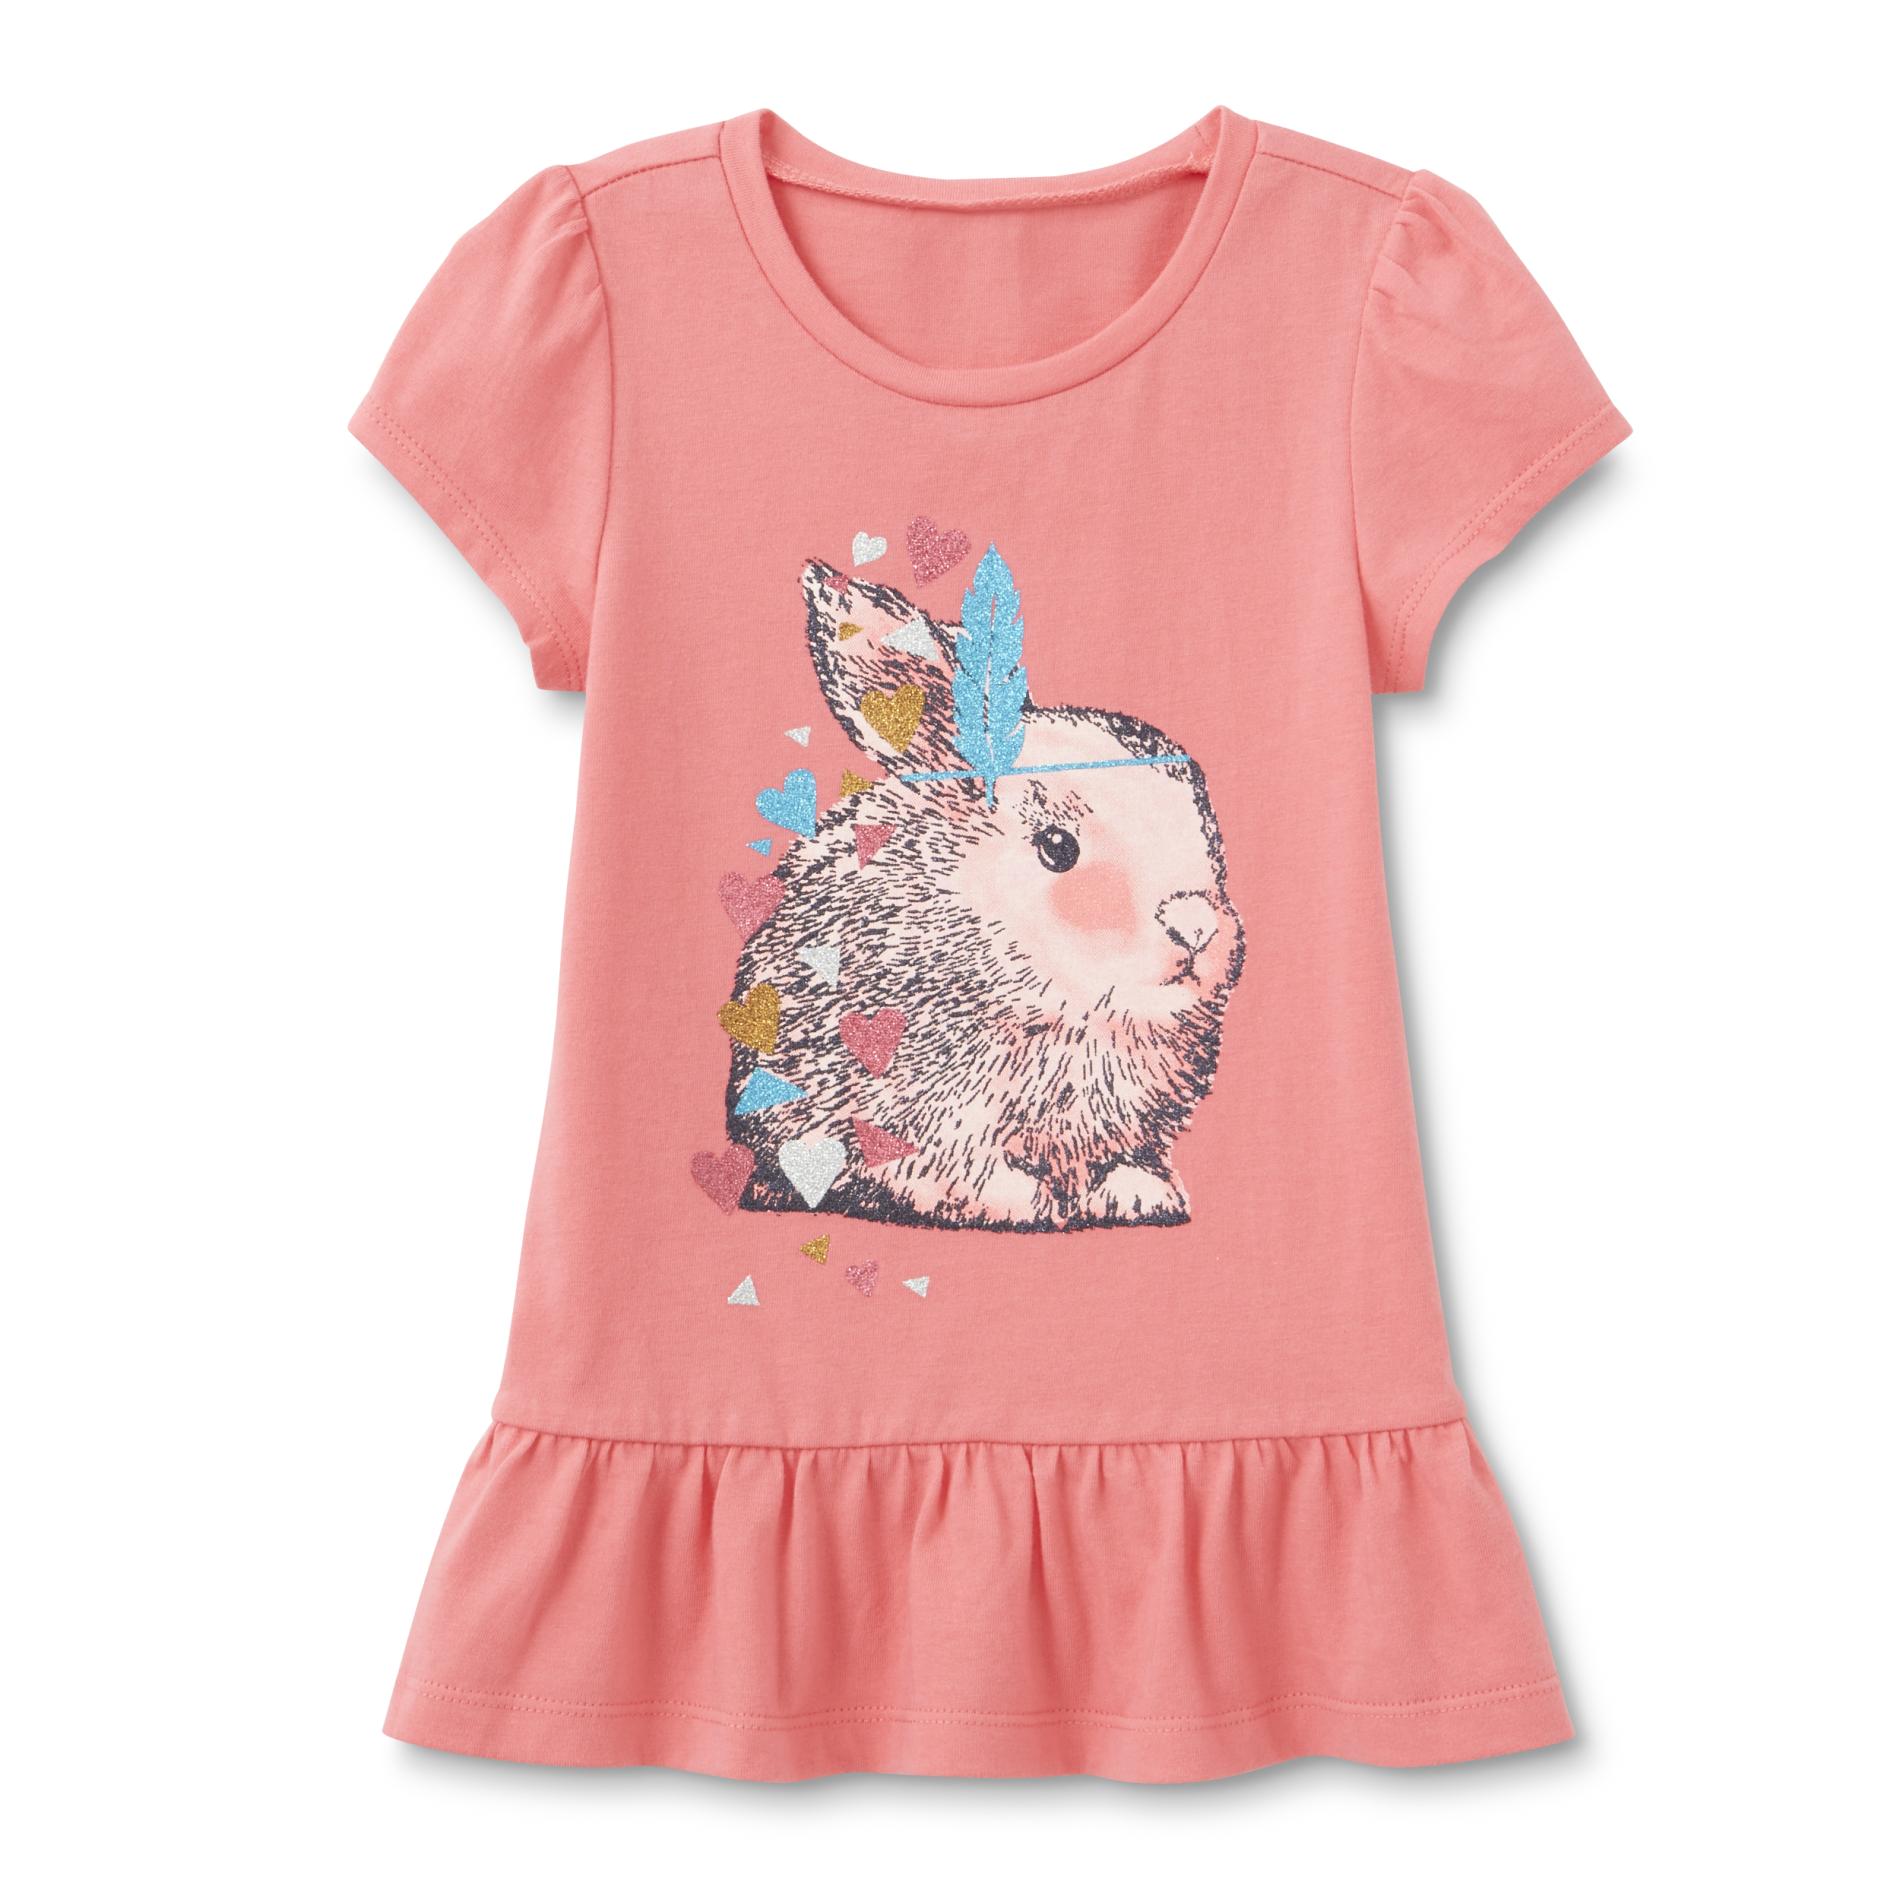 Toughskins Infant & Toddler Girl's Peplum Tunic - Bunny